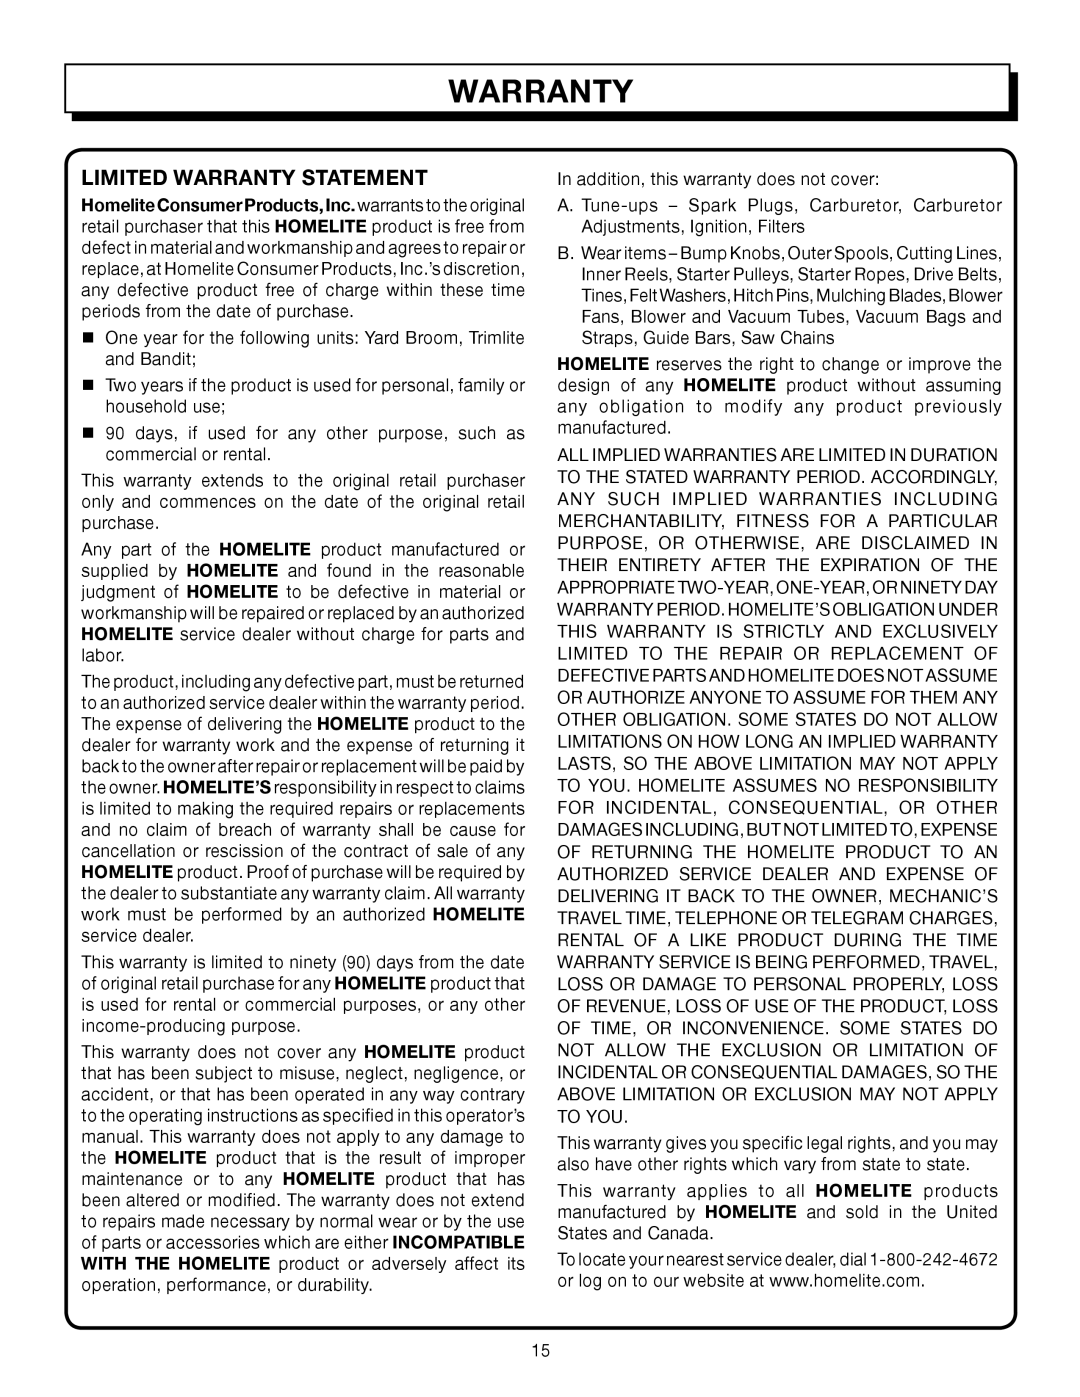 Homelite UT08072, UT08572 manual Limited Warranty Statement 